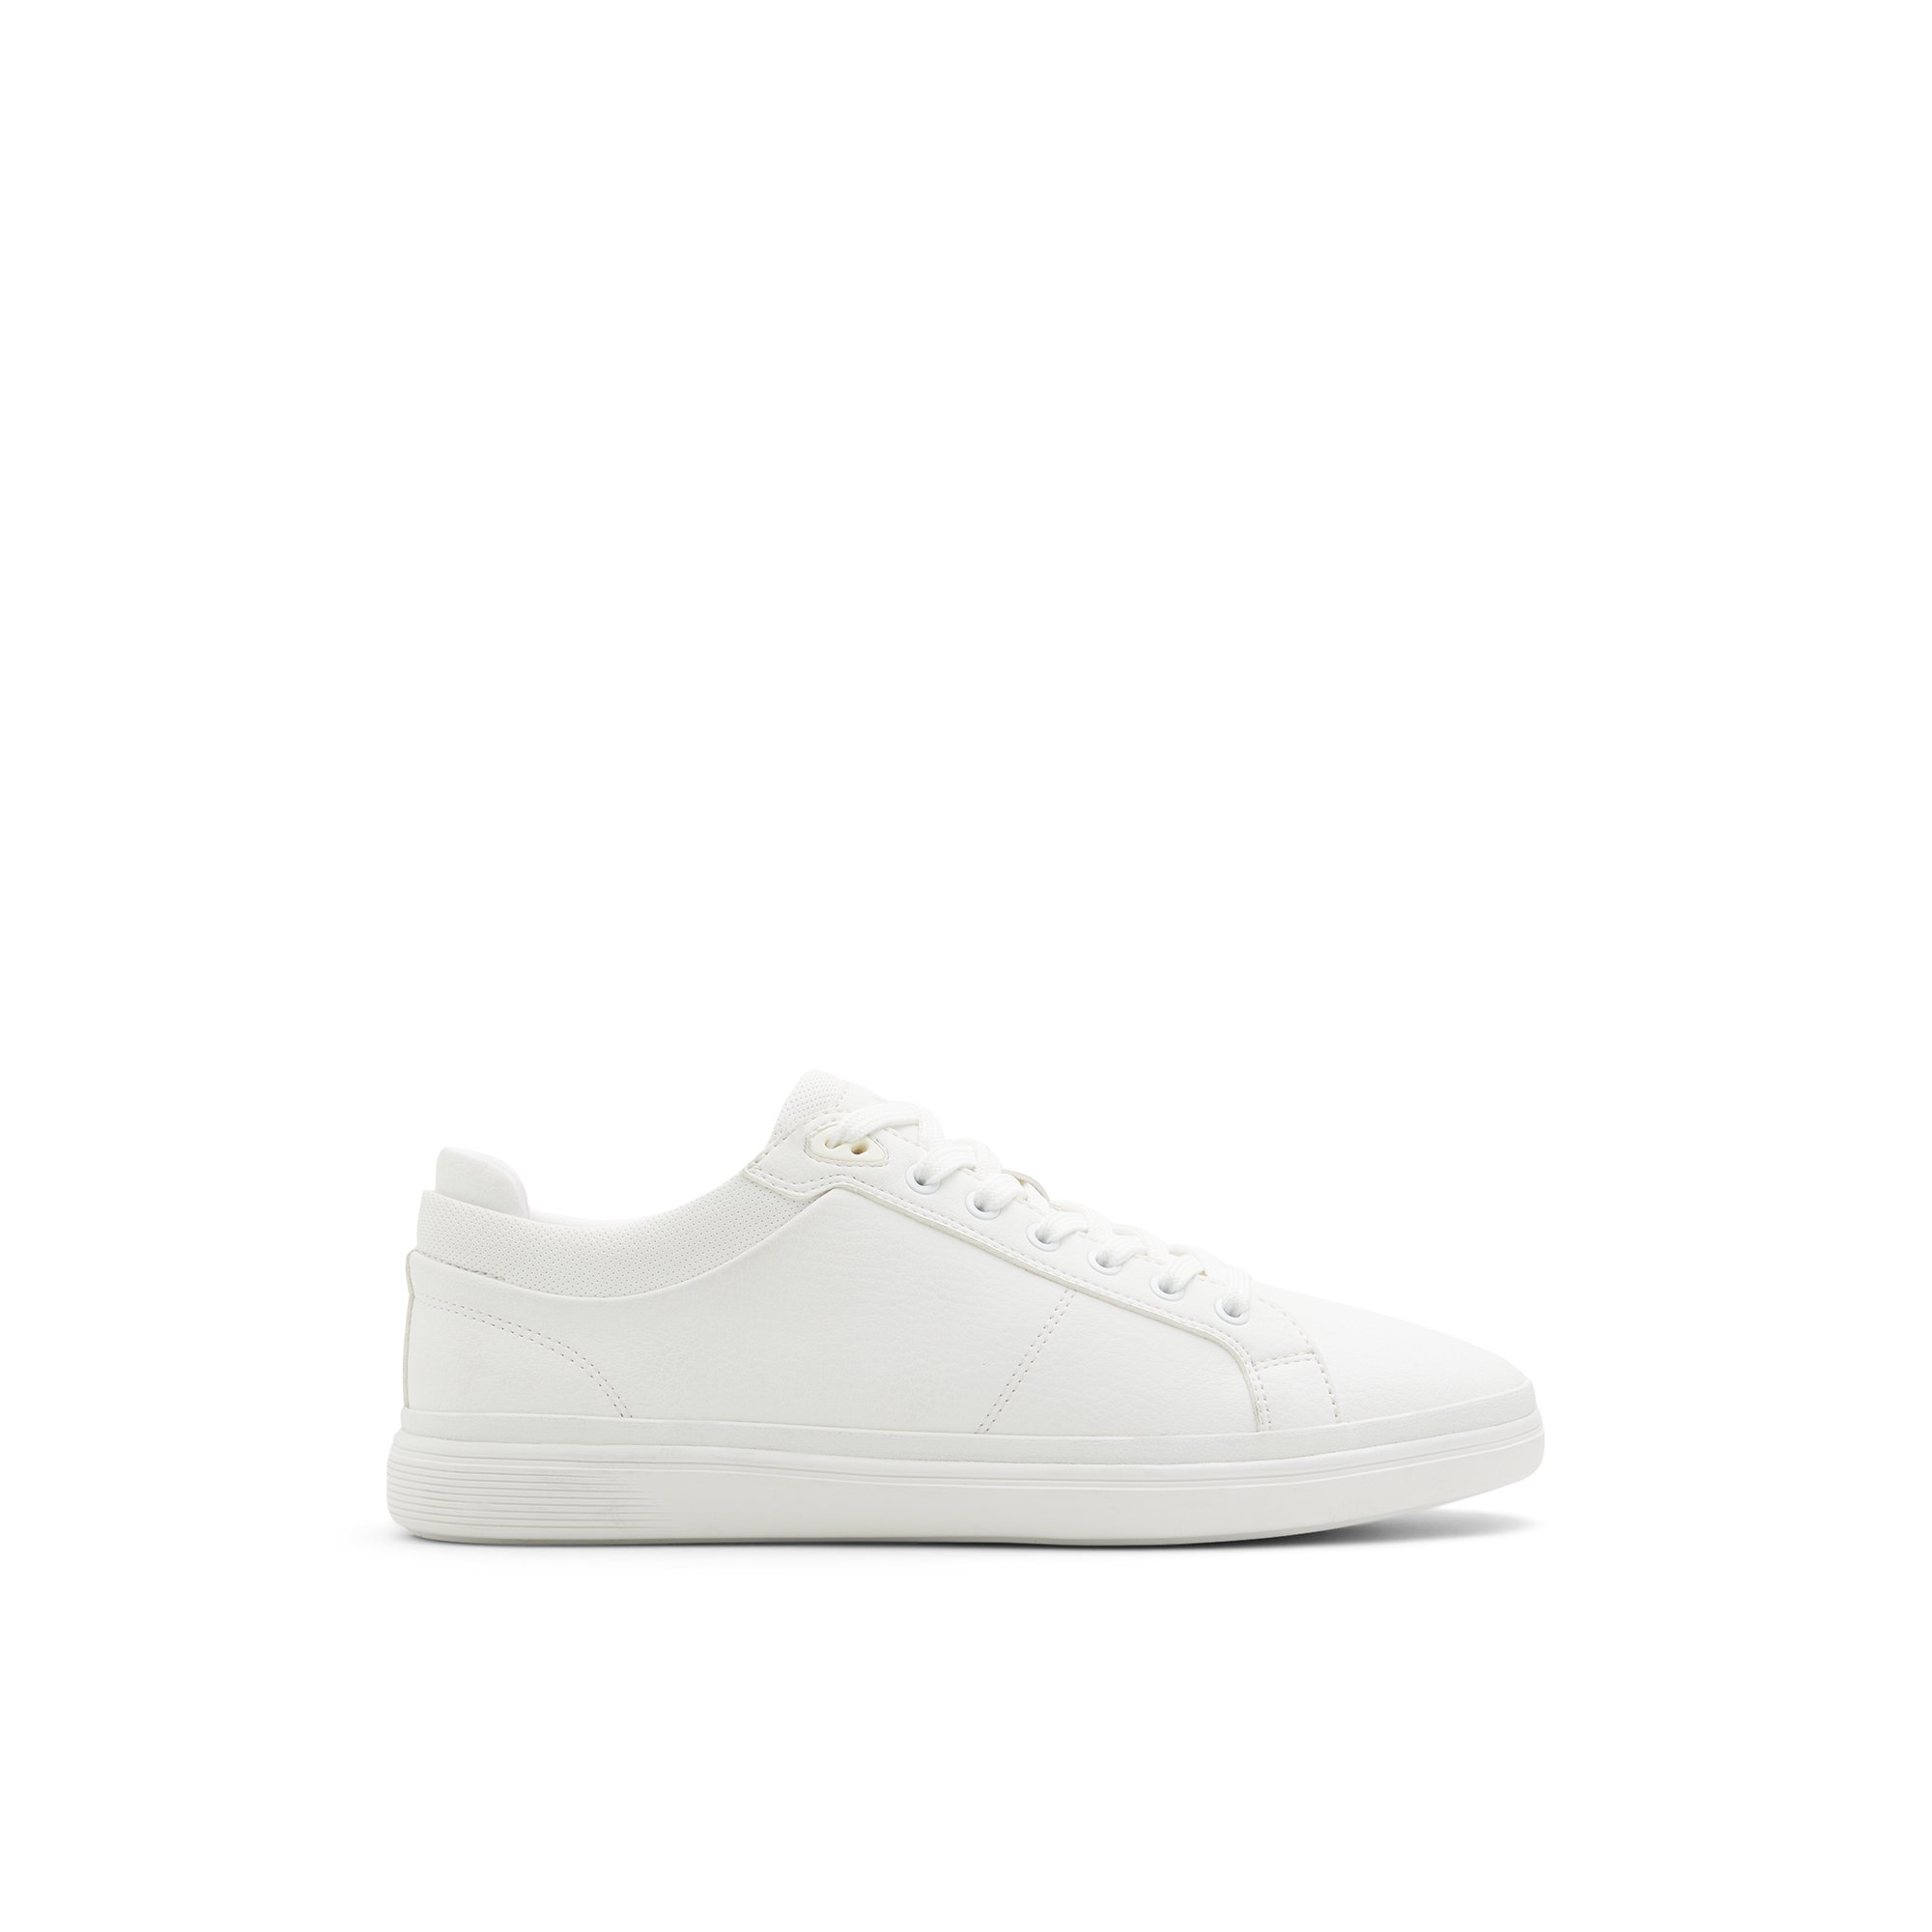 ALDO Finespec - Men's Sneakers Low Top - White